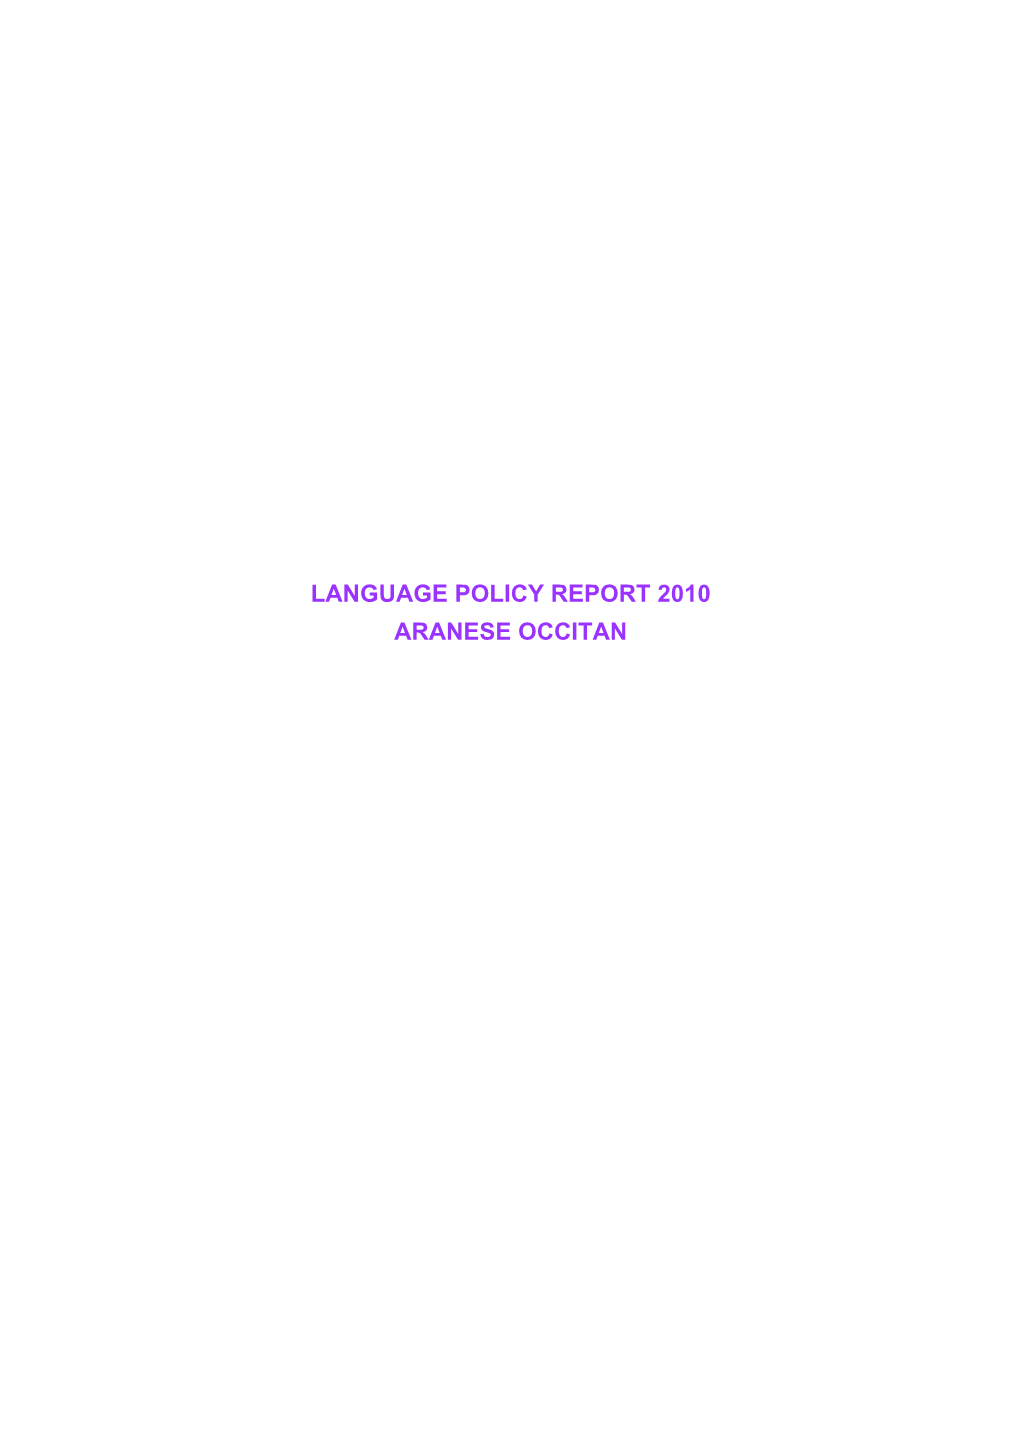 LANGUAGE POLICY REPORT 2010 ARANESE OCCITAN Language Policy Report 2010 Aranese Occitan